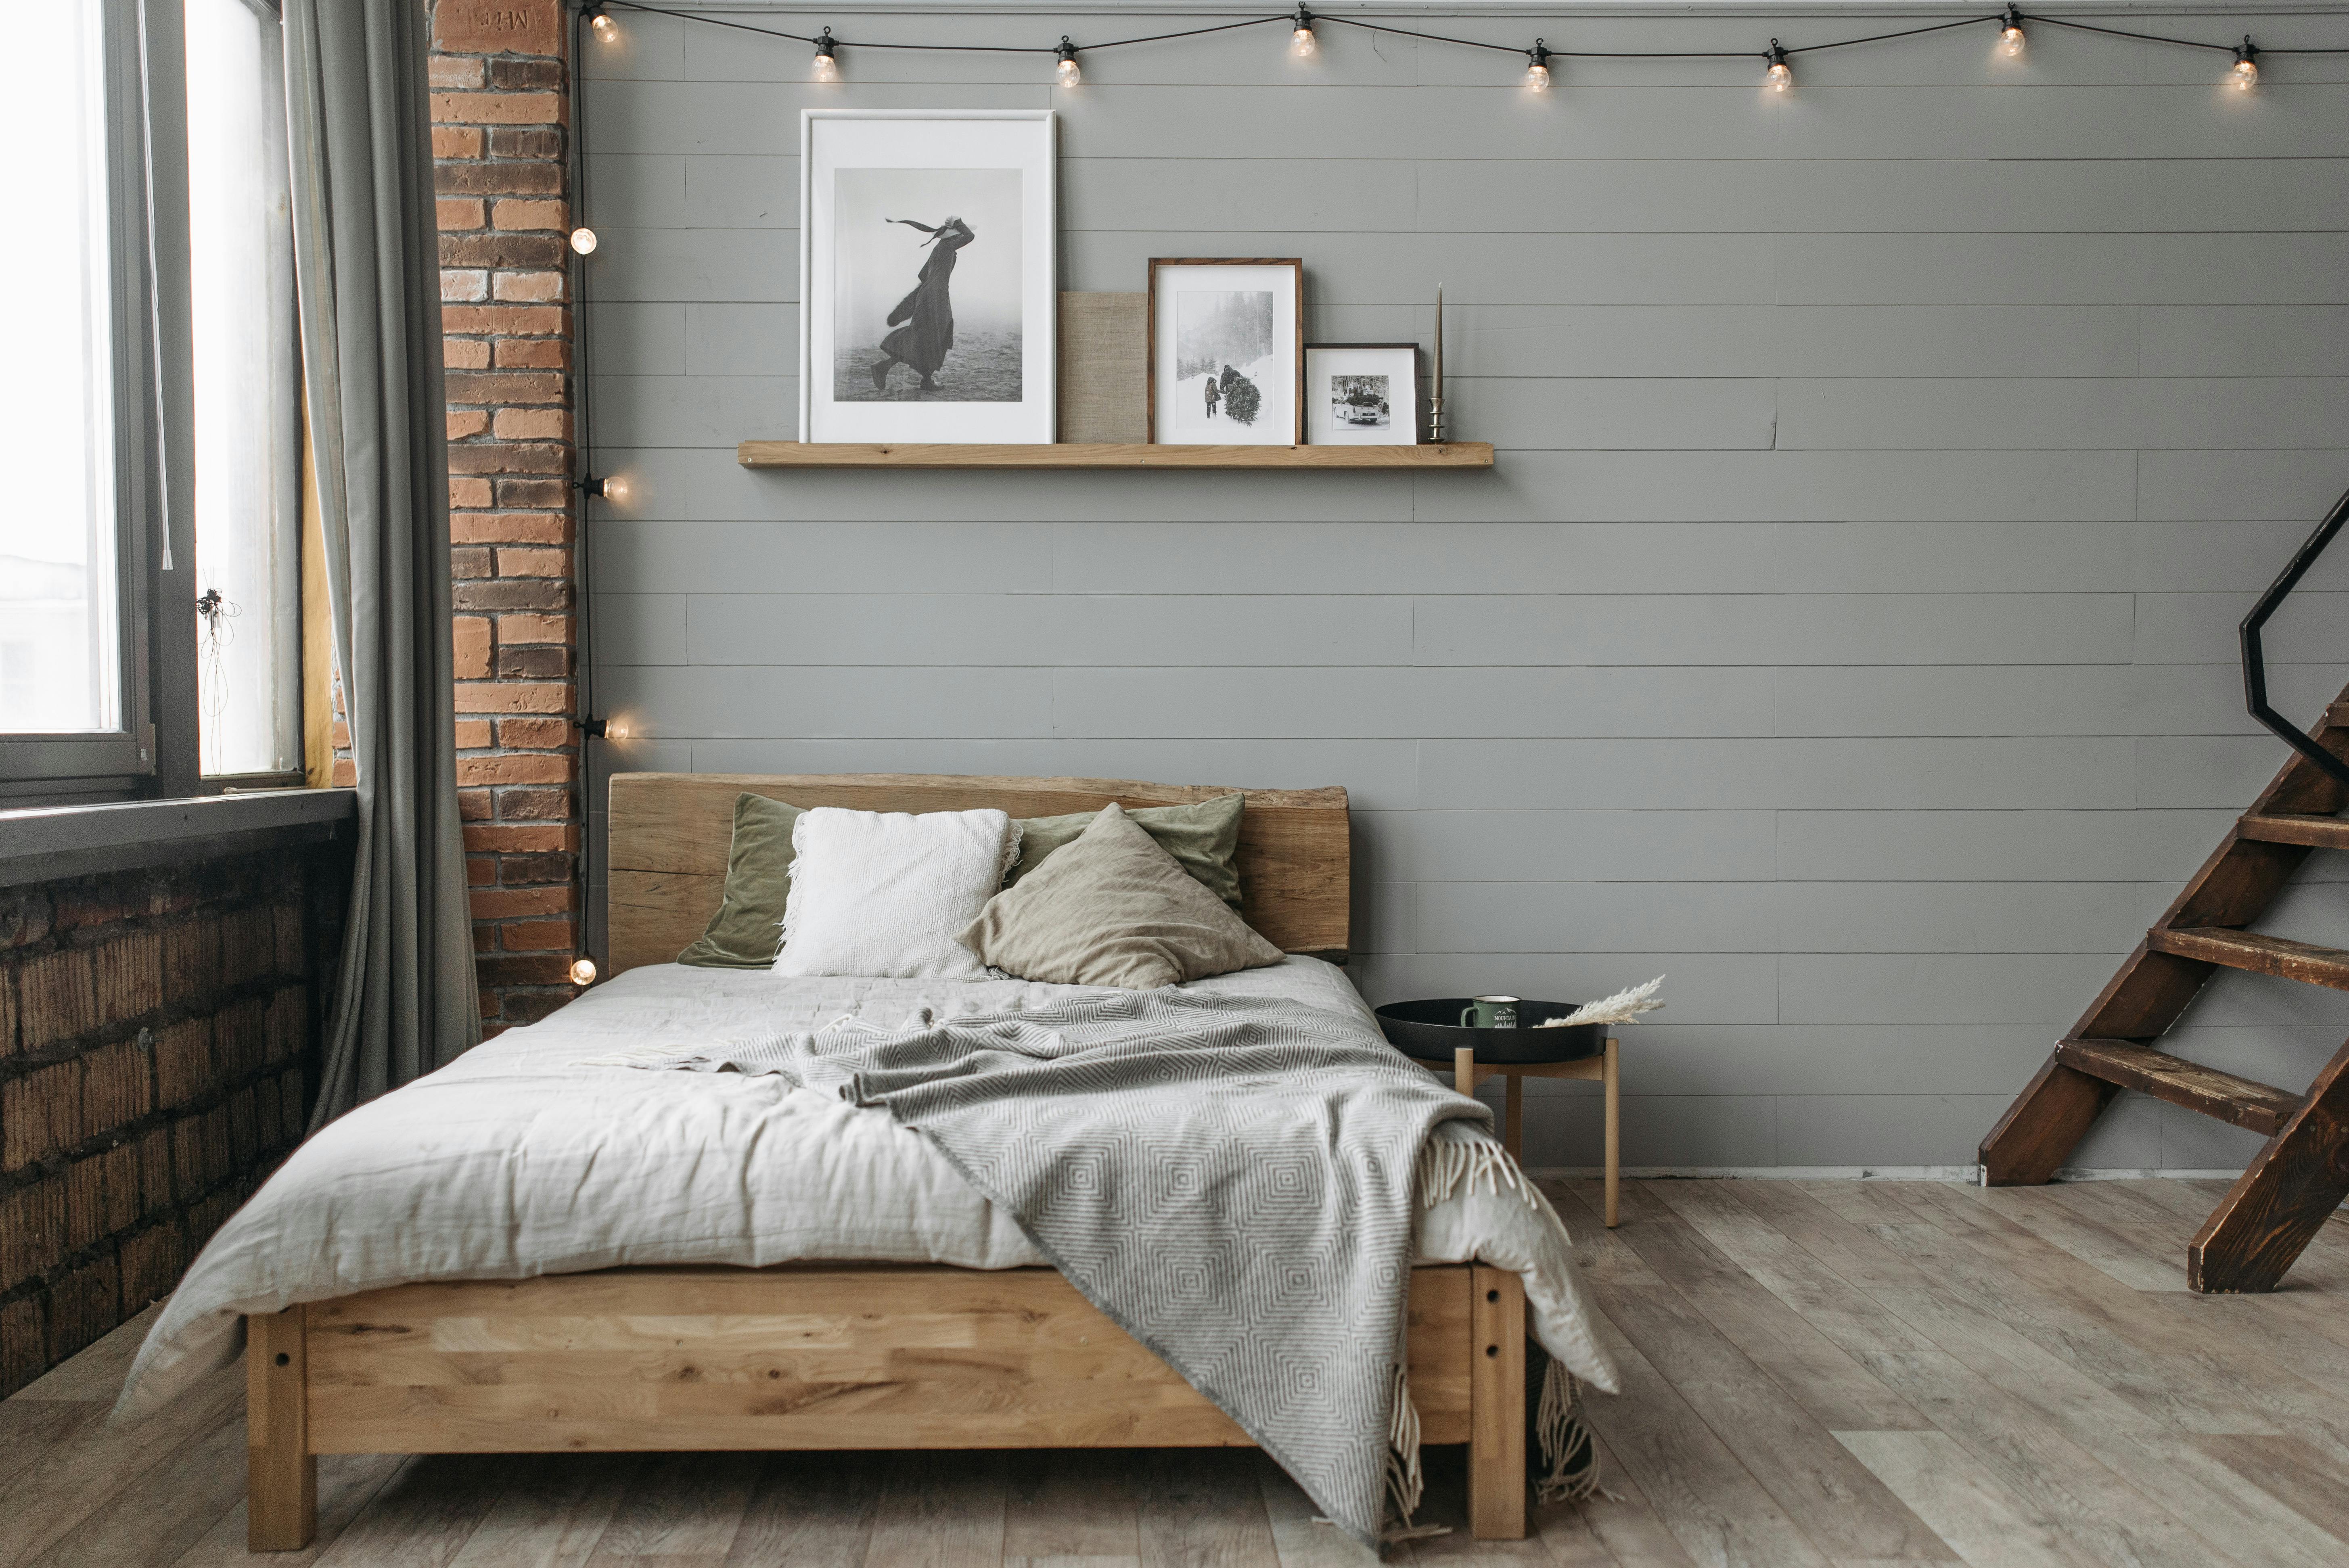 Bedroom with gray walls and wooden floor